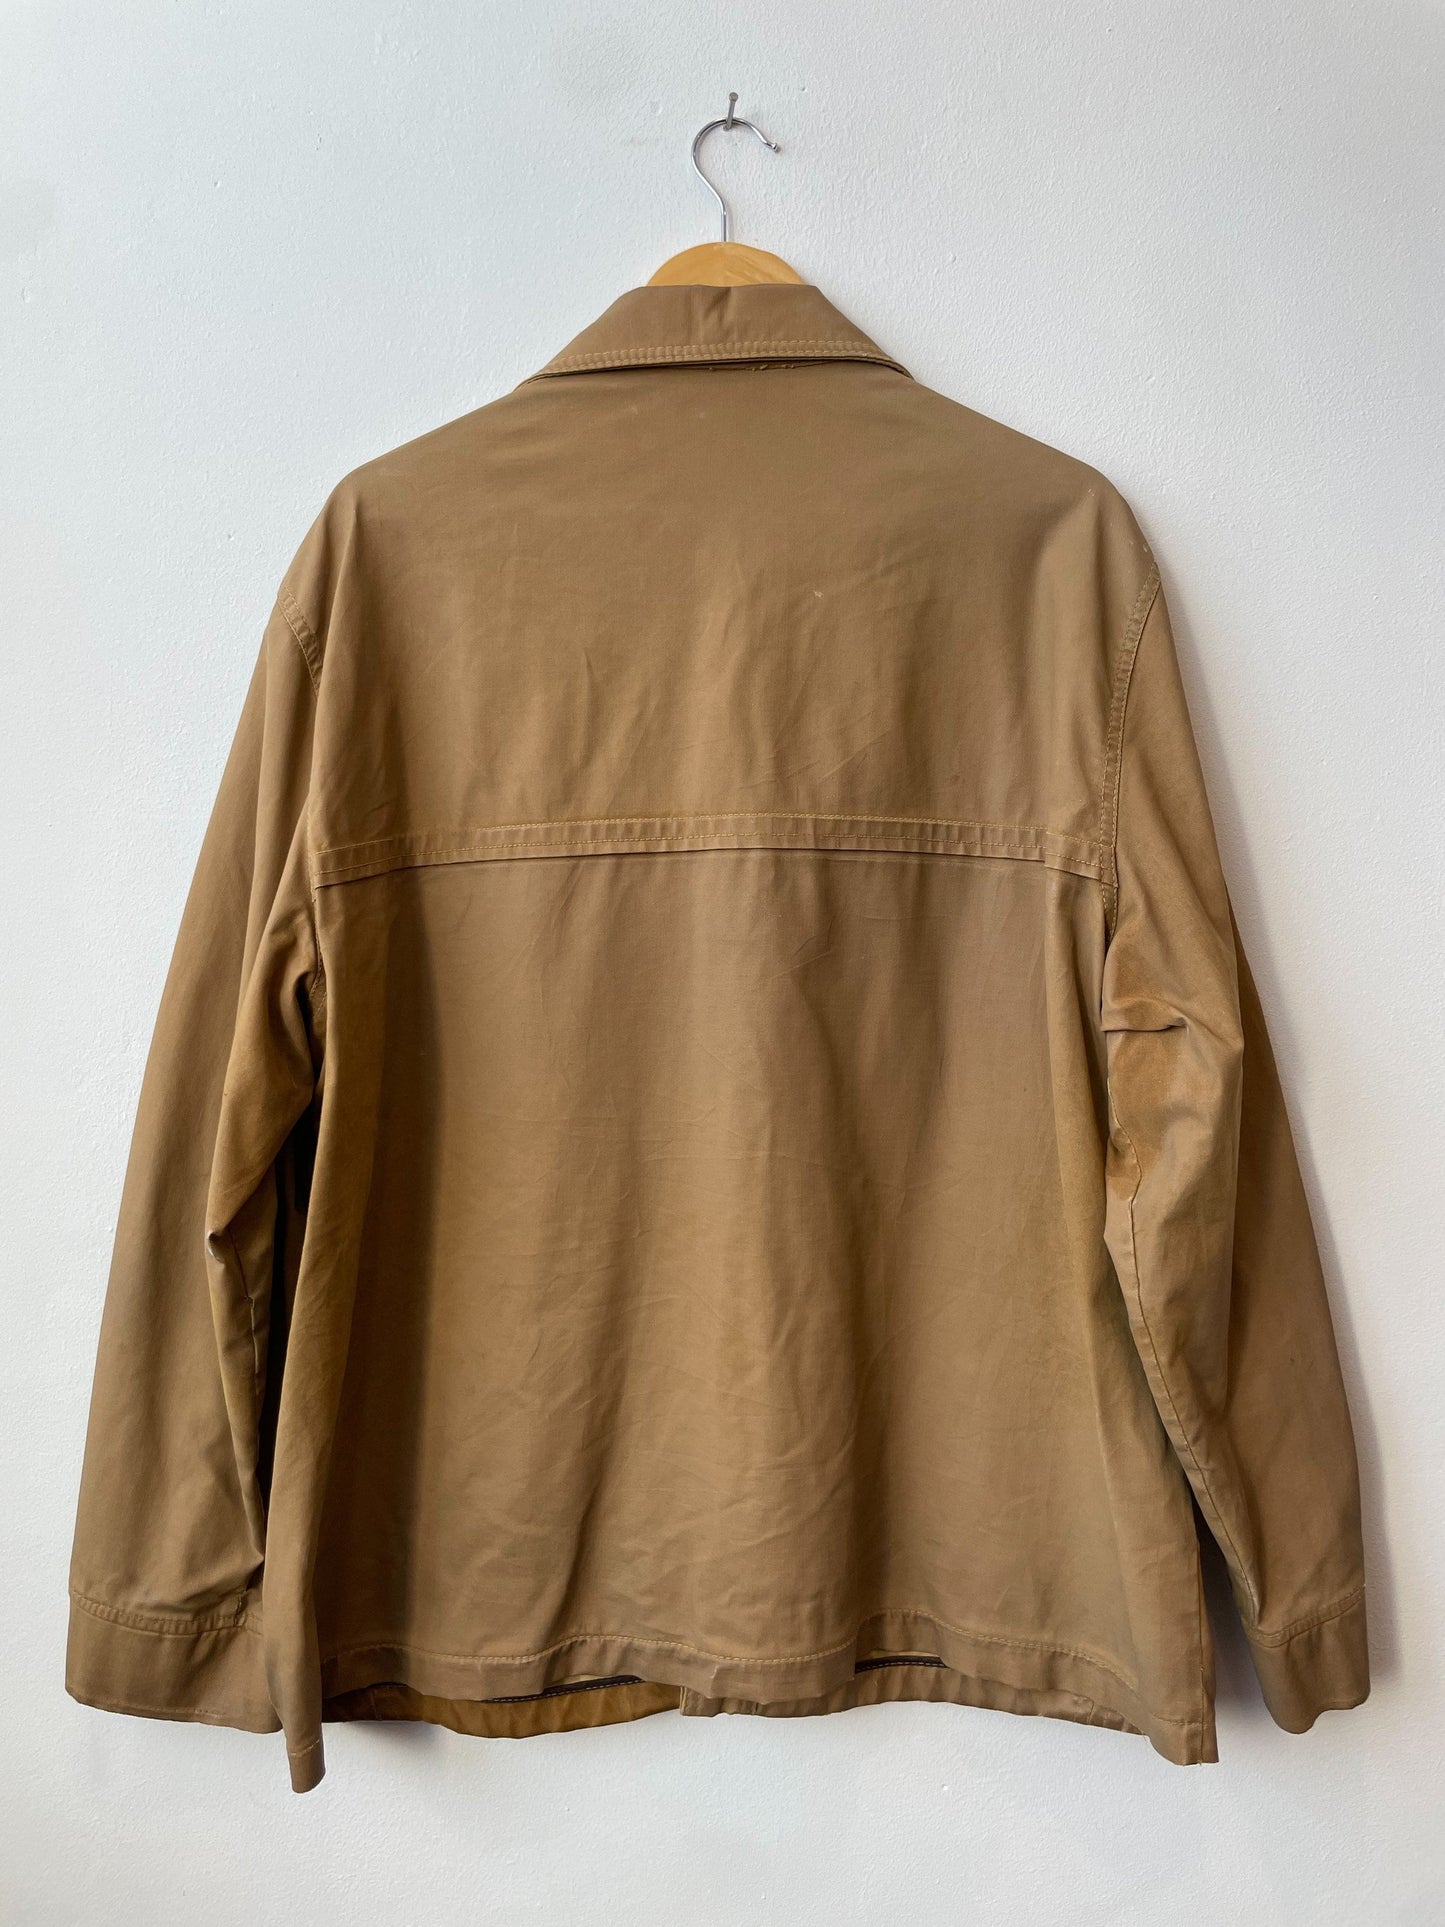 Vintage 1970s Leather Hunting Jacket